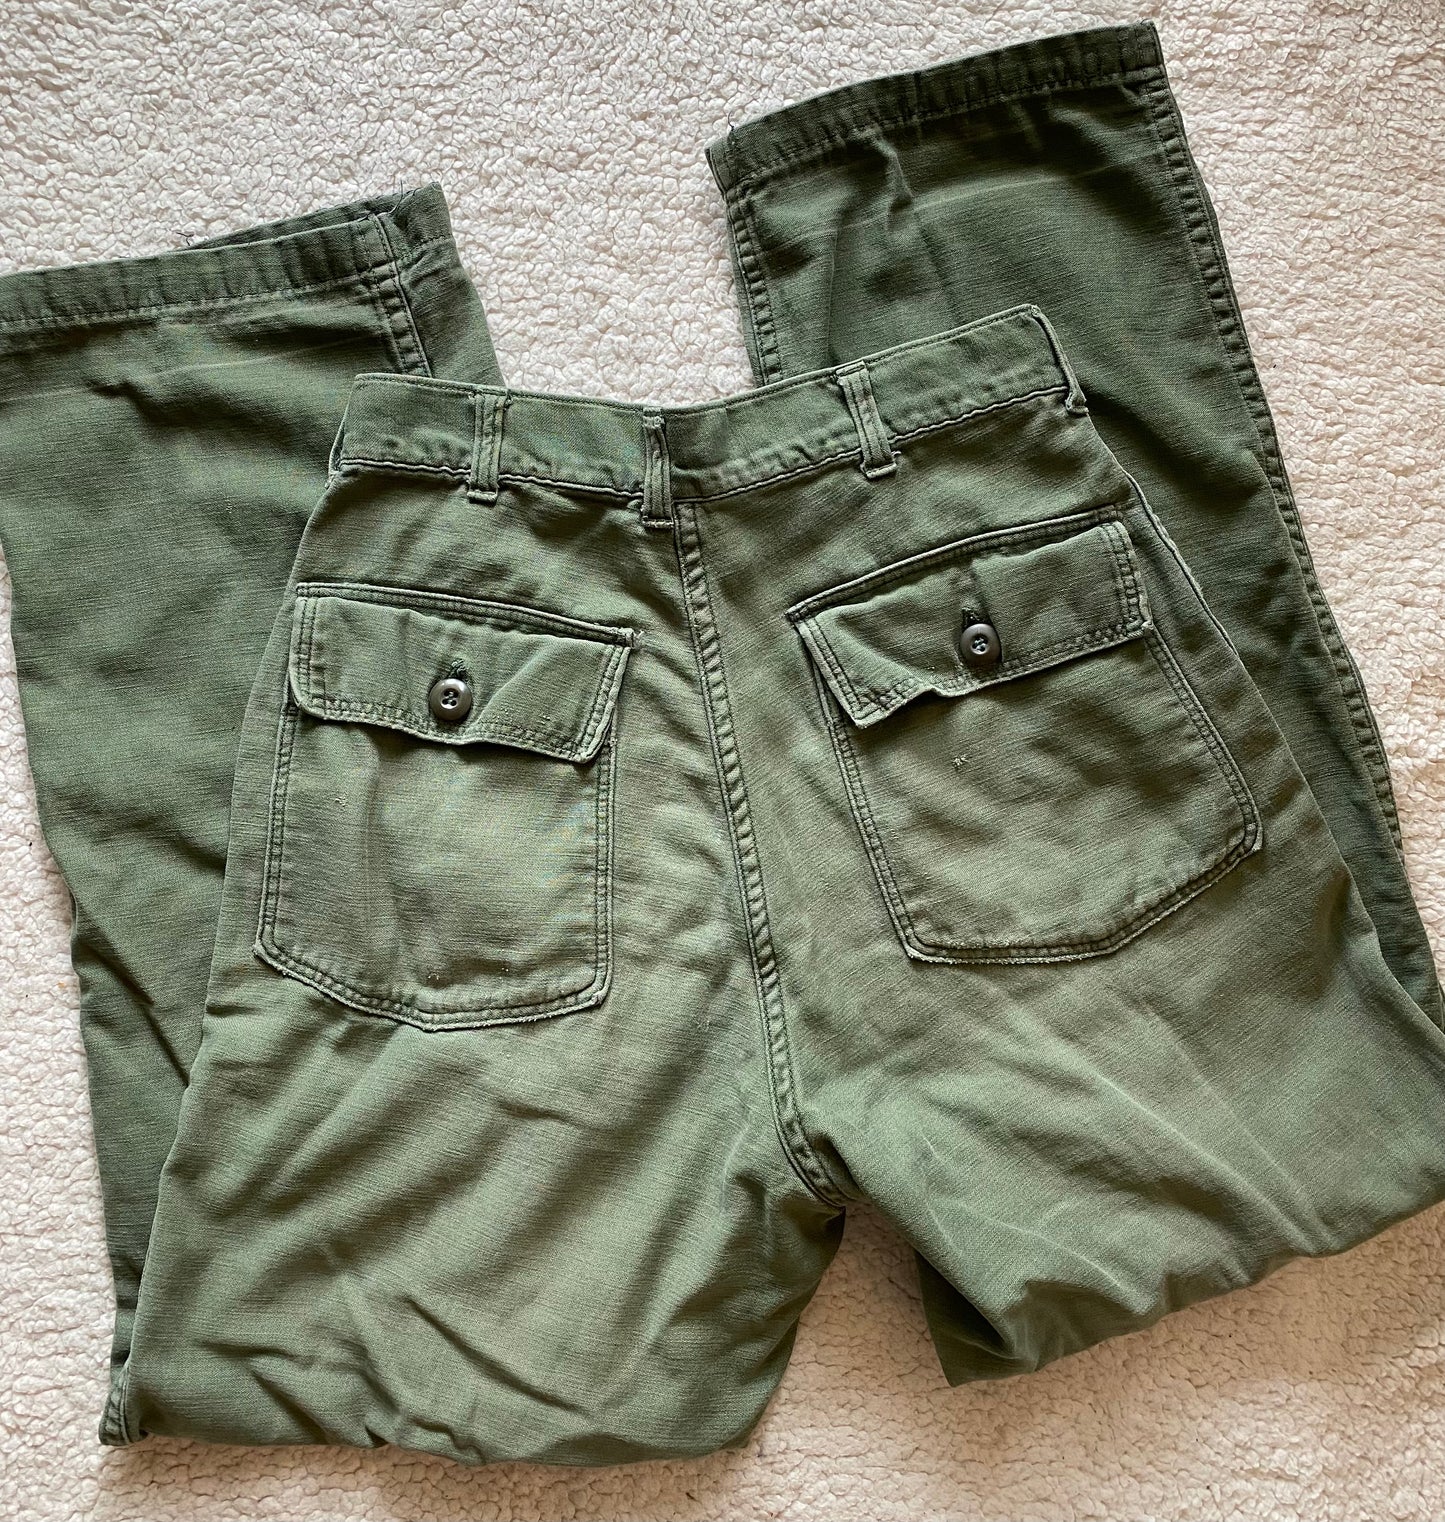 Size 26/27 OG107 military pants